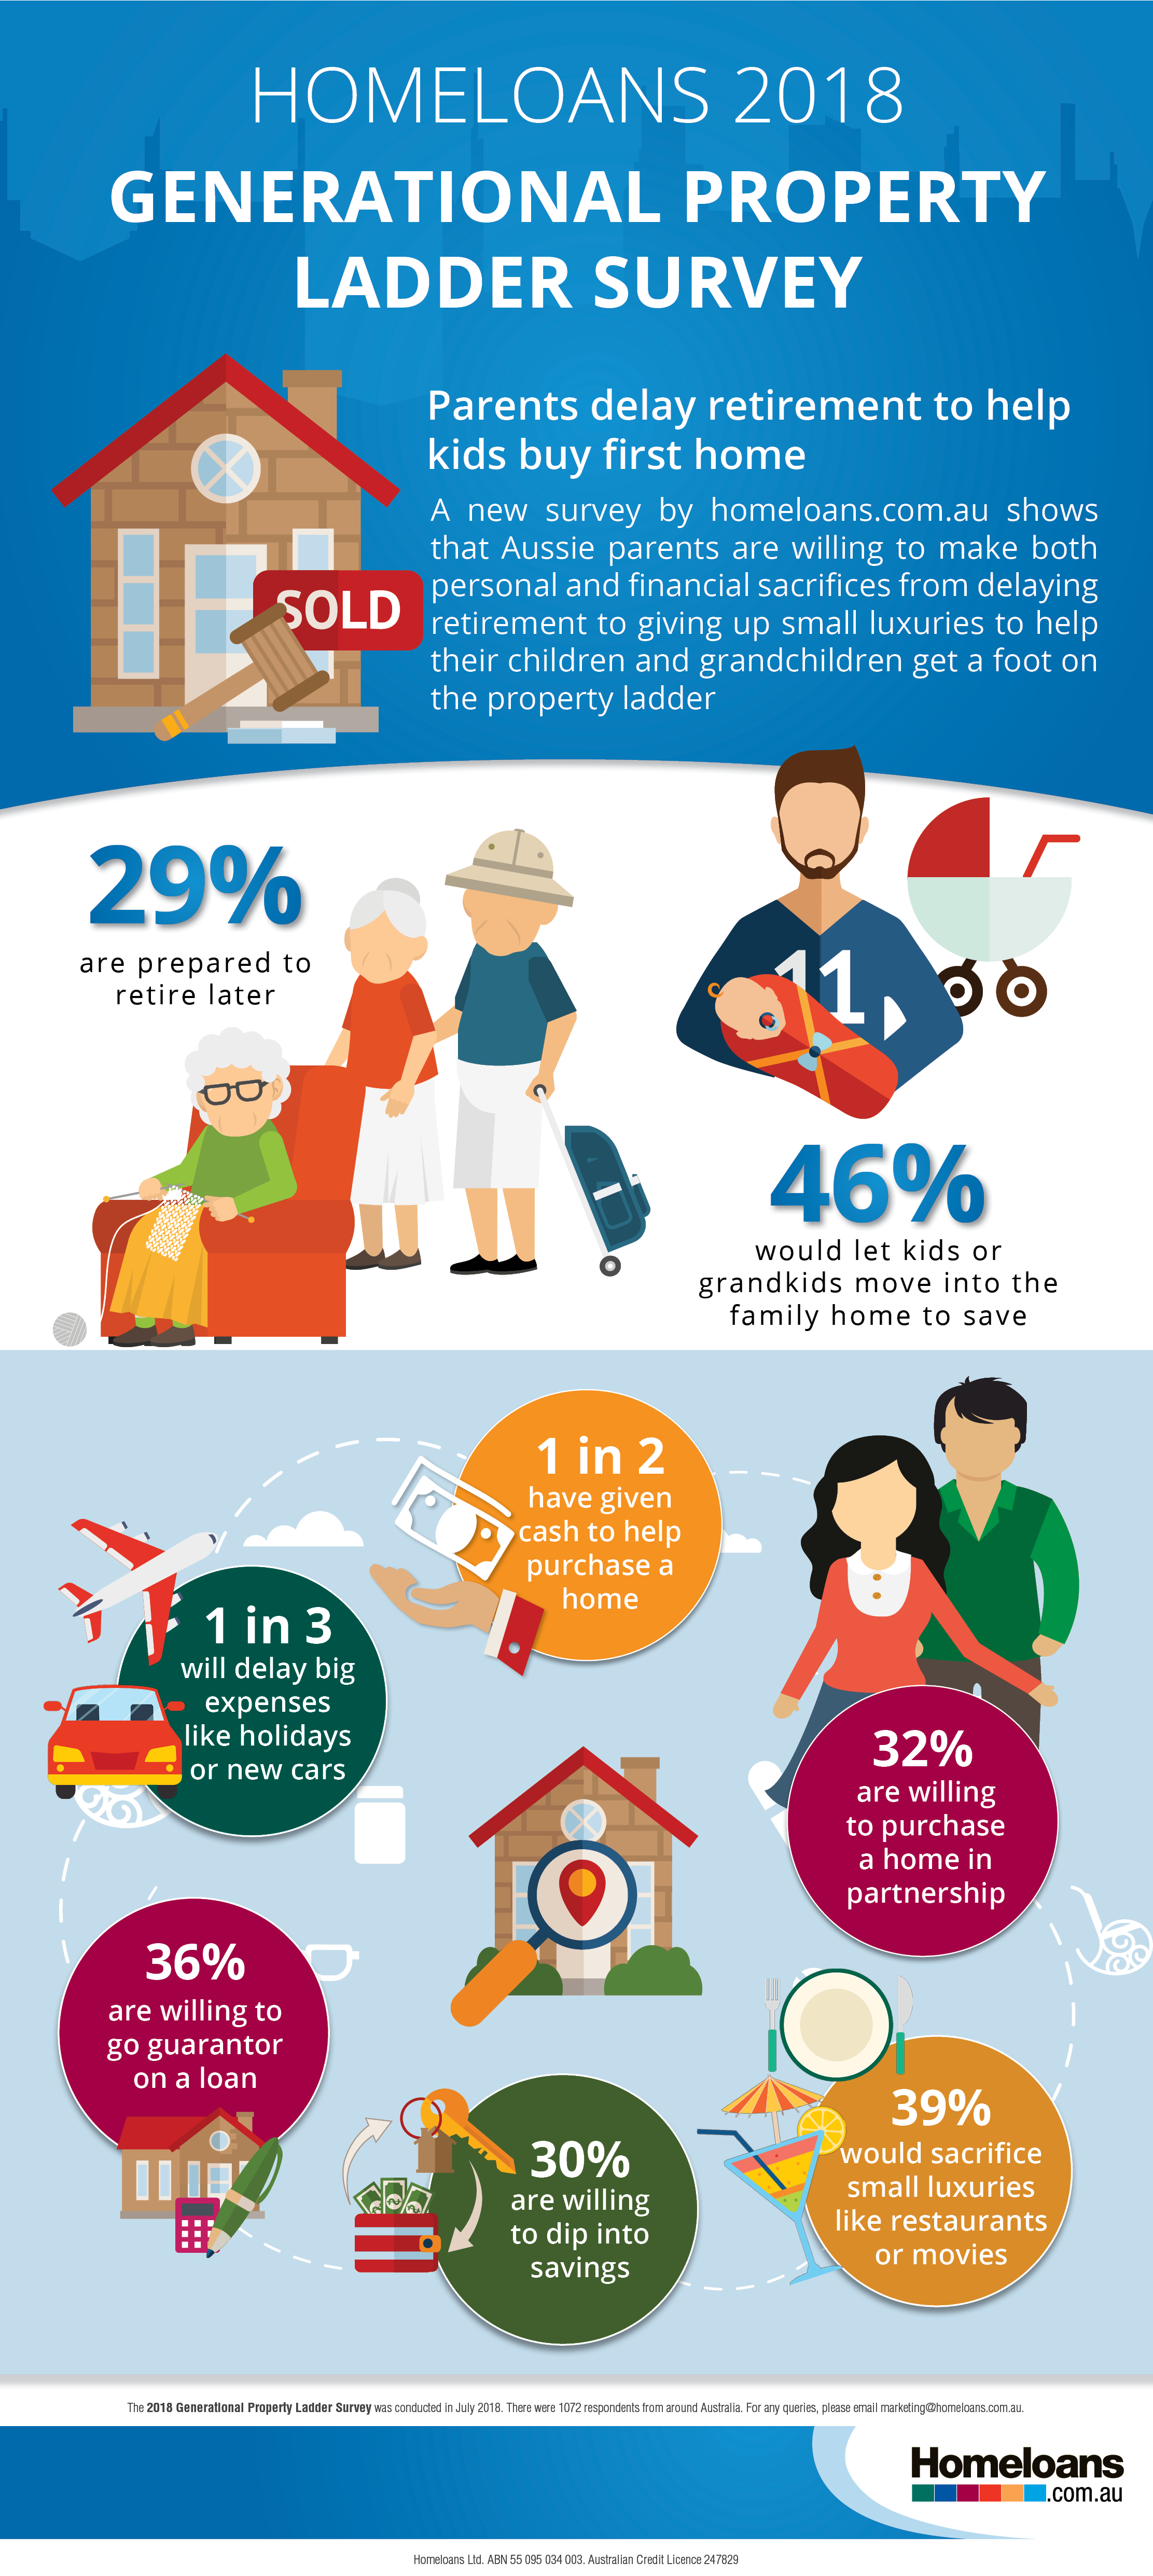 homeloans-2018-generational-property-ladder-survey-infographic